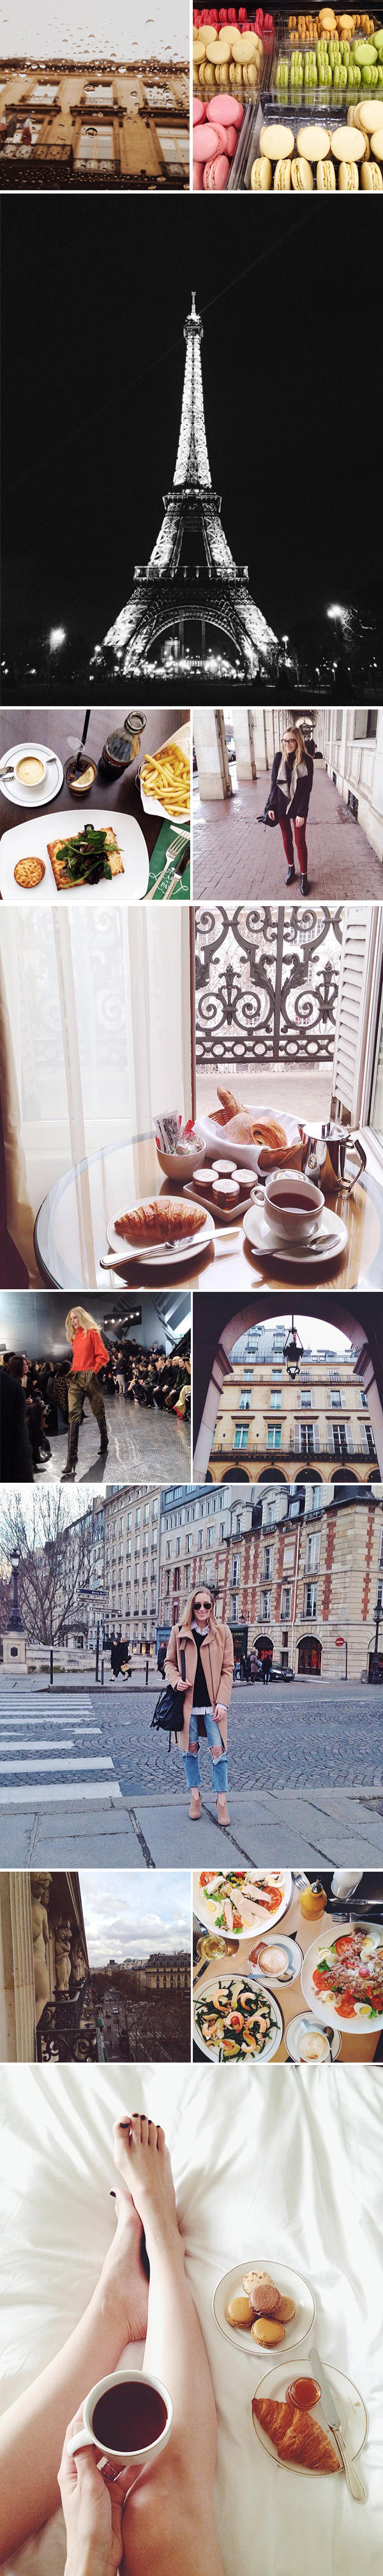 eatsleepwear, instagram, paris, paris-fashion-week